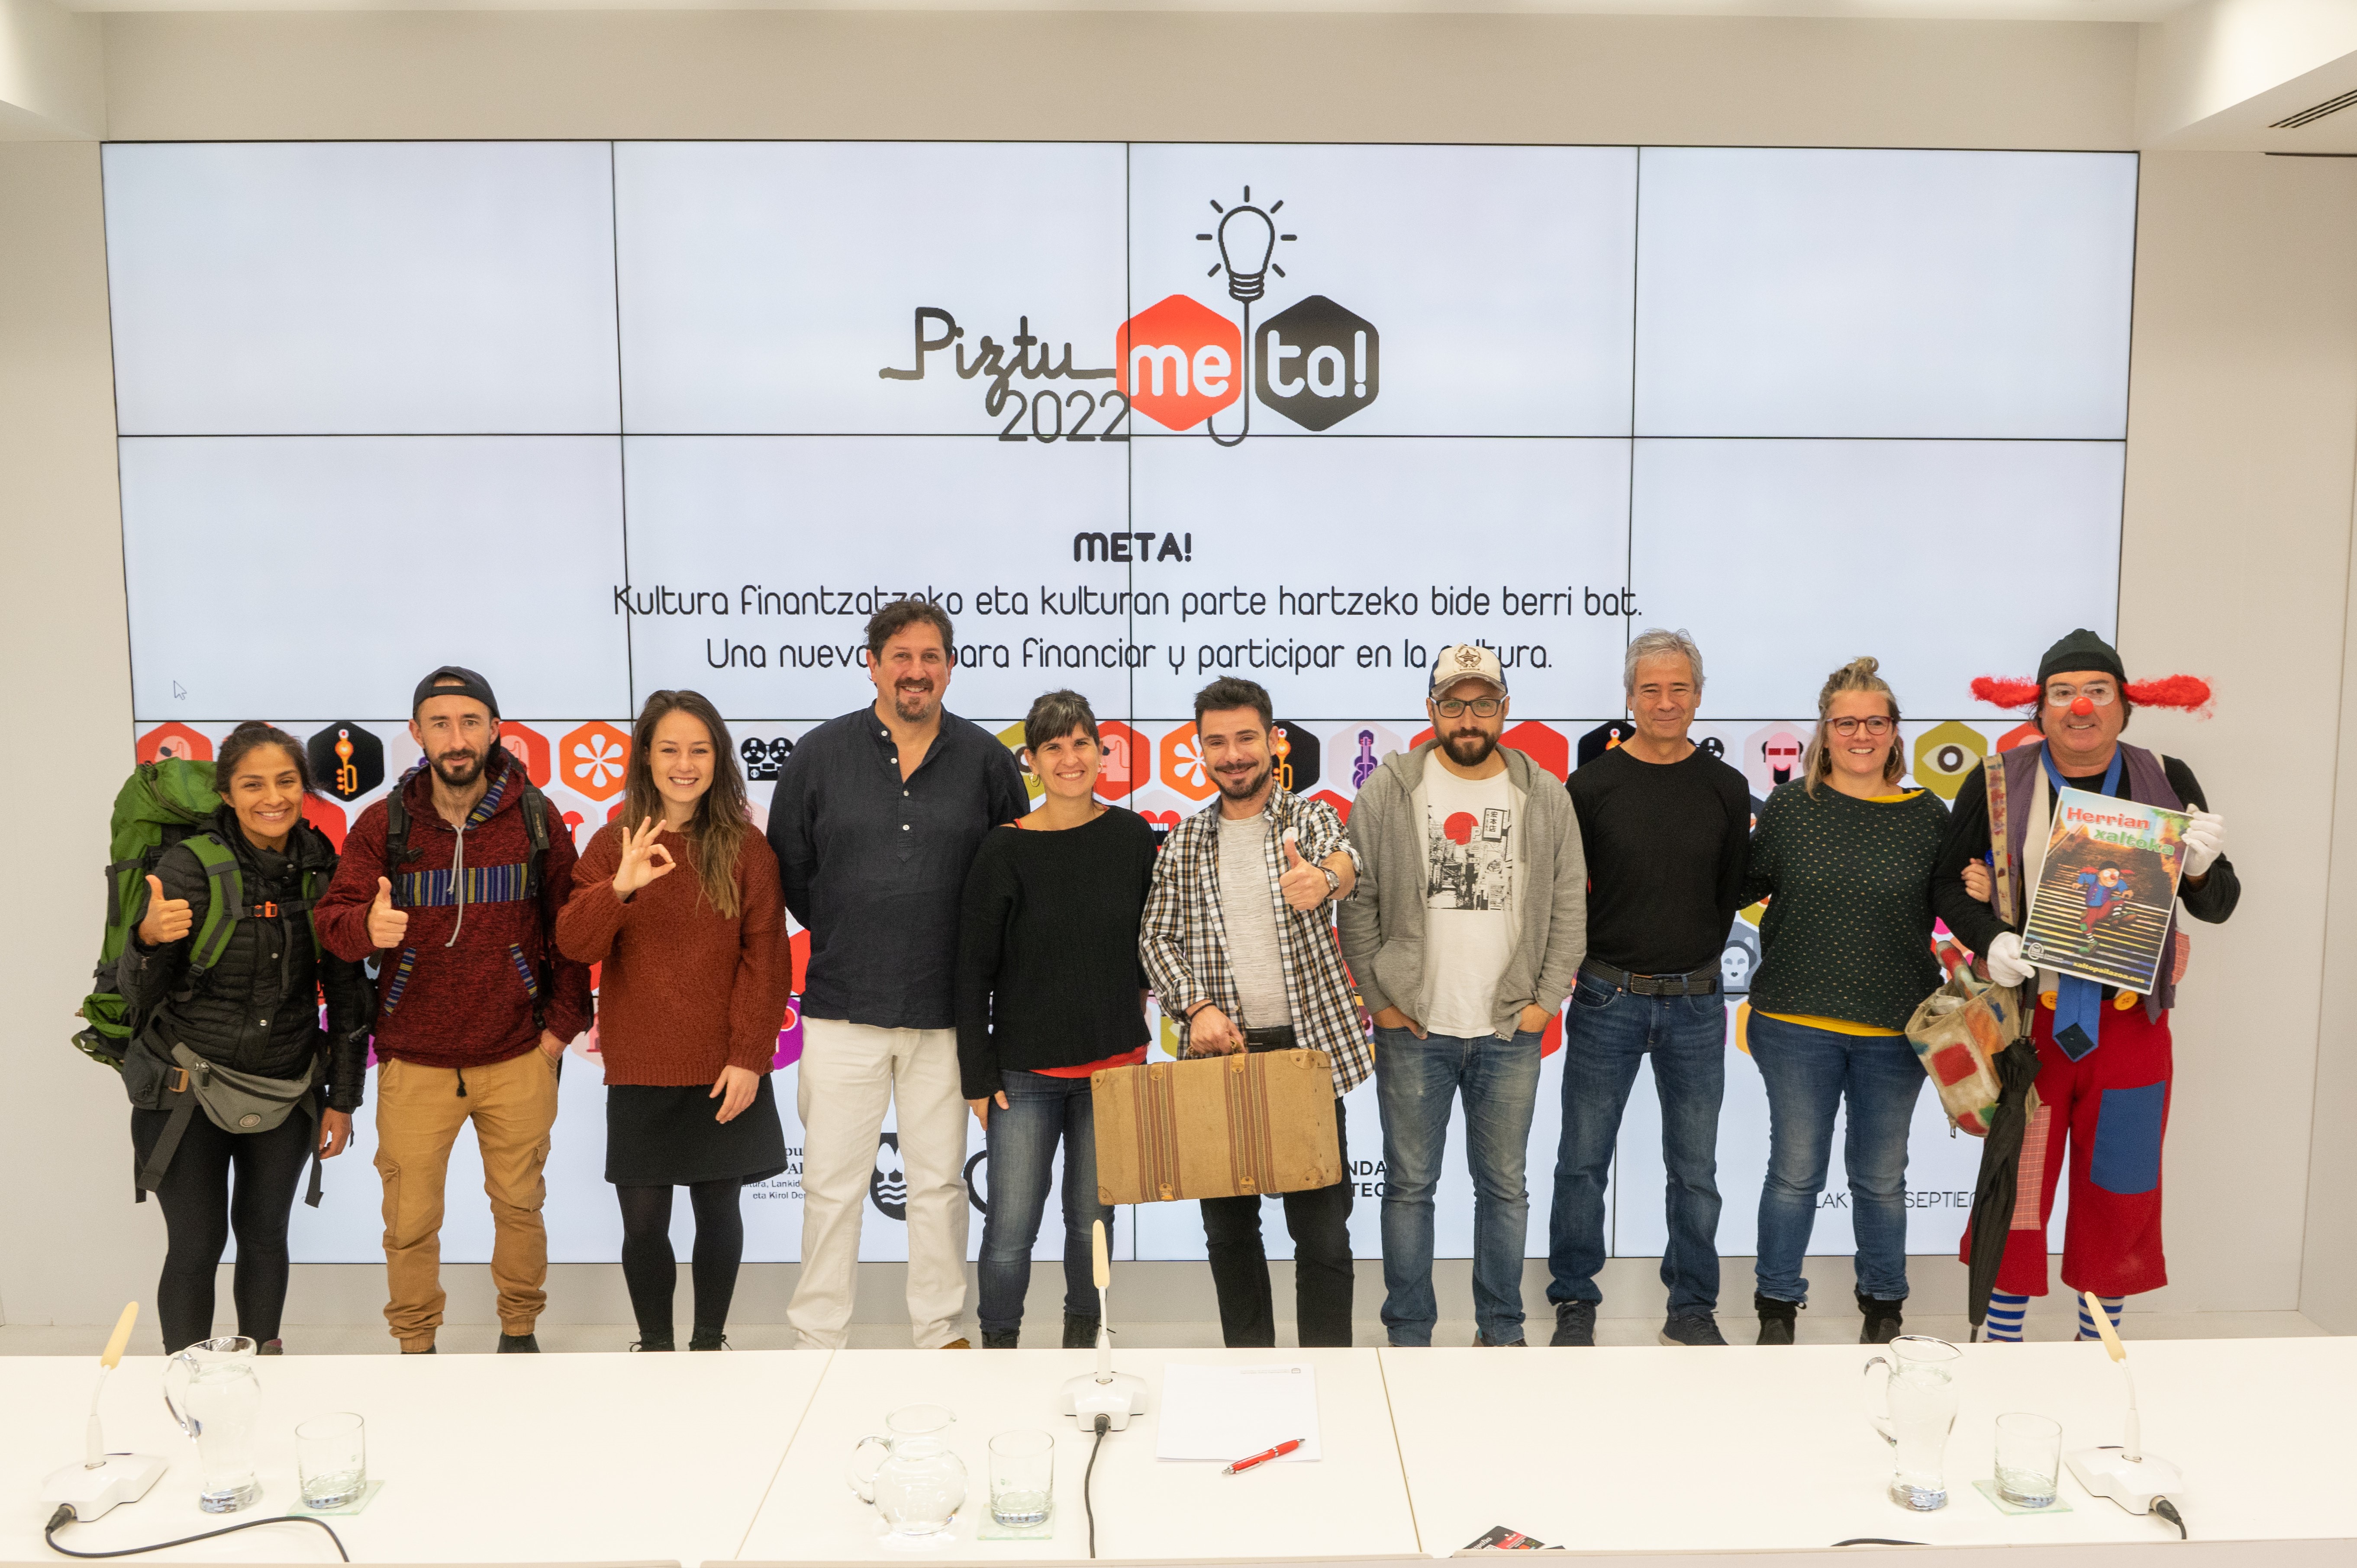 Piztu META! 2022 lanza su campaña de crowdfunding para impulsar 15 proyectos culturales en Gipuzkoa